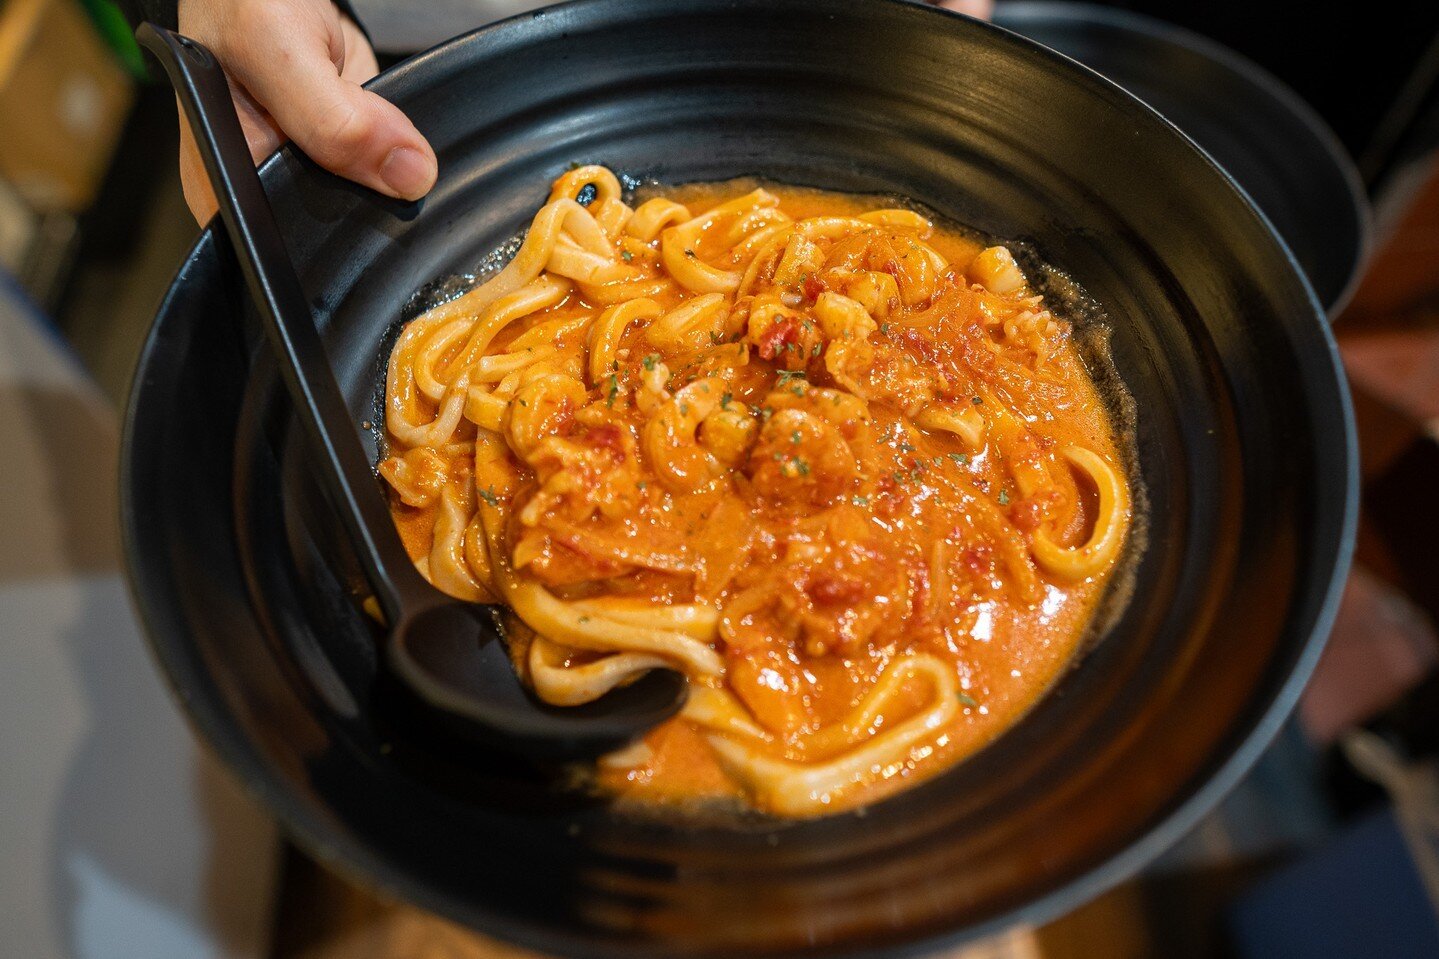 Slurp up happiness with every bite of our delicious udon noodles! ITADAKIMASU! #FoodieFindsLA 🍜😋 

👇 Freshly homemade noodles 
◾️◽️◾️◽️◾️◽️◾️◽️◾️◽️
🍜 ᴍᴀʀᴜɢᴀᴍᴇ ᴍᴏɴᴢᴏ ʟᴀ
⏰ ᴍᴏɴ - ᴛʜᴜʀꜱ : 11:30 ᴀᴍ - 9:00 ᴘᴍ 
⏰ ꜰʀɪ - ꜱᴜɴ: 11:30 ᴀᴍ - 10:00 ᴘᴍ
📍 329 ᴇᴀ